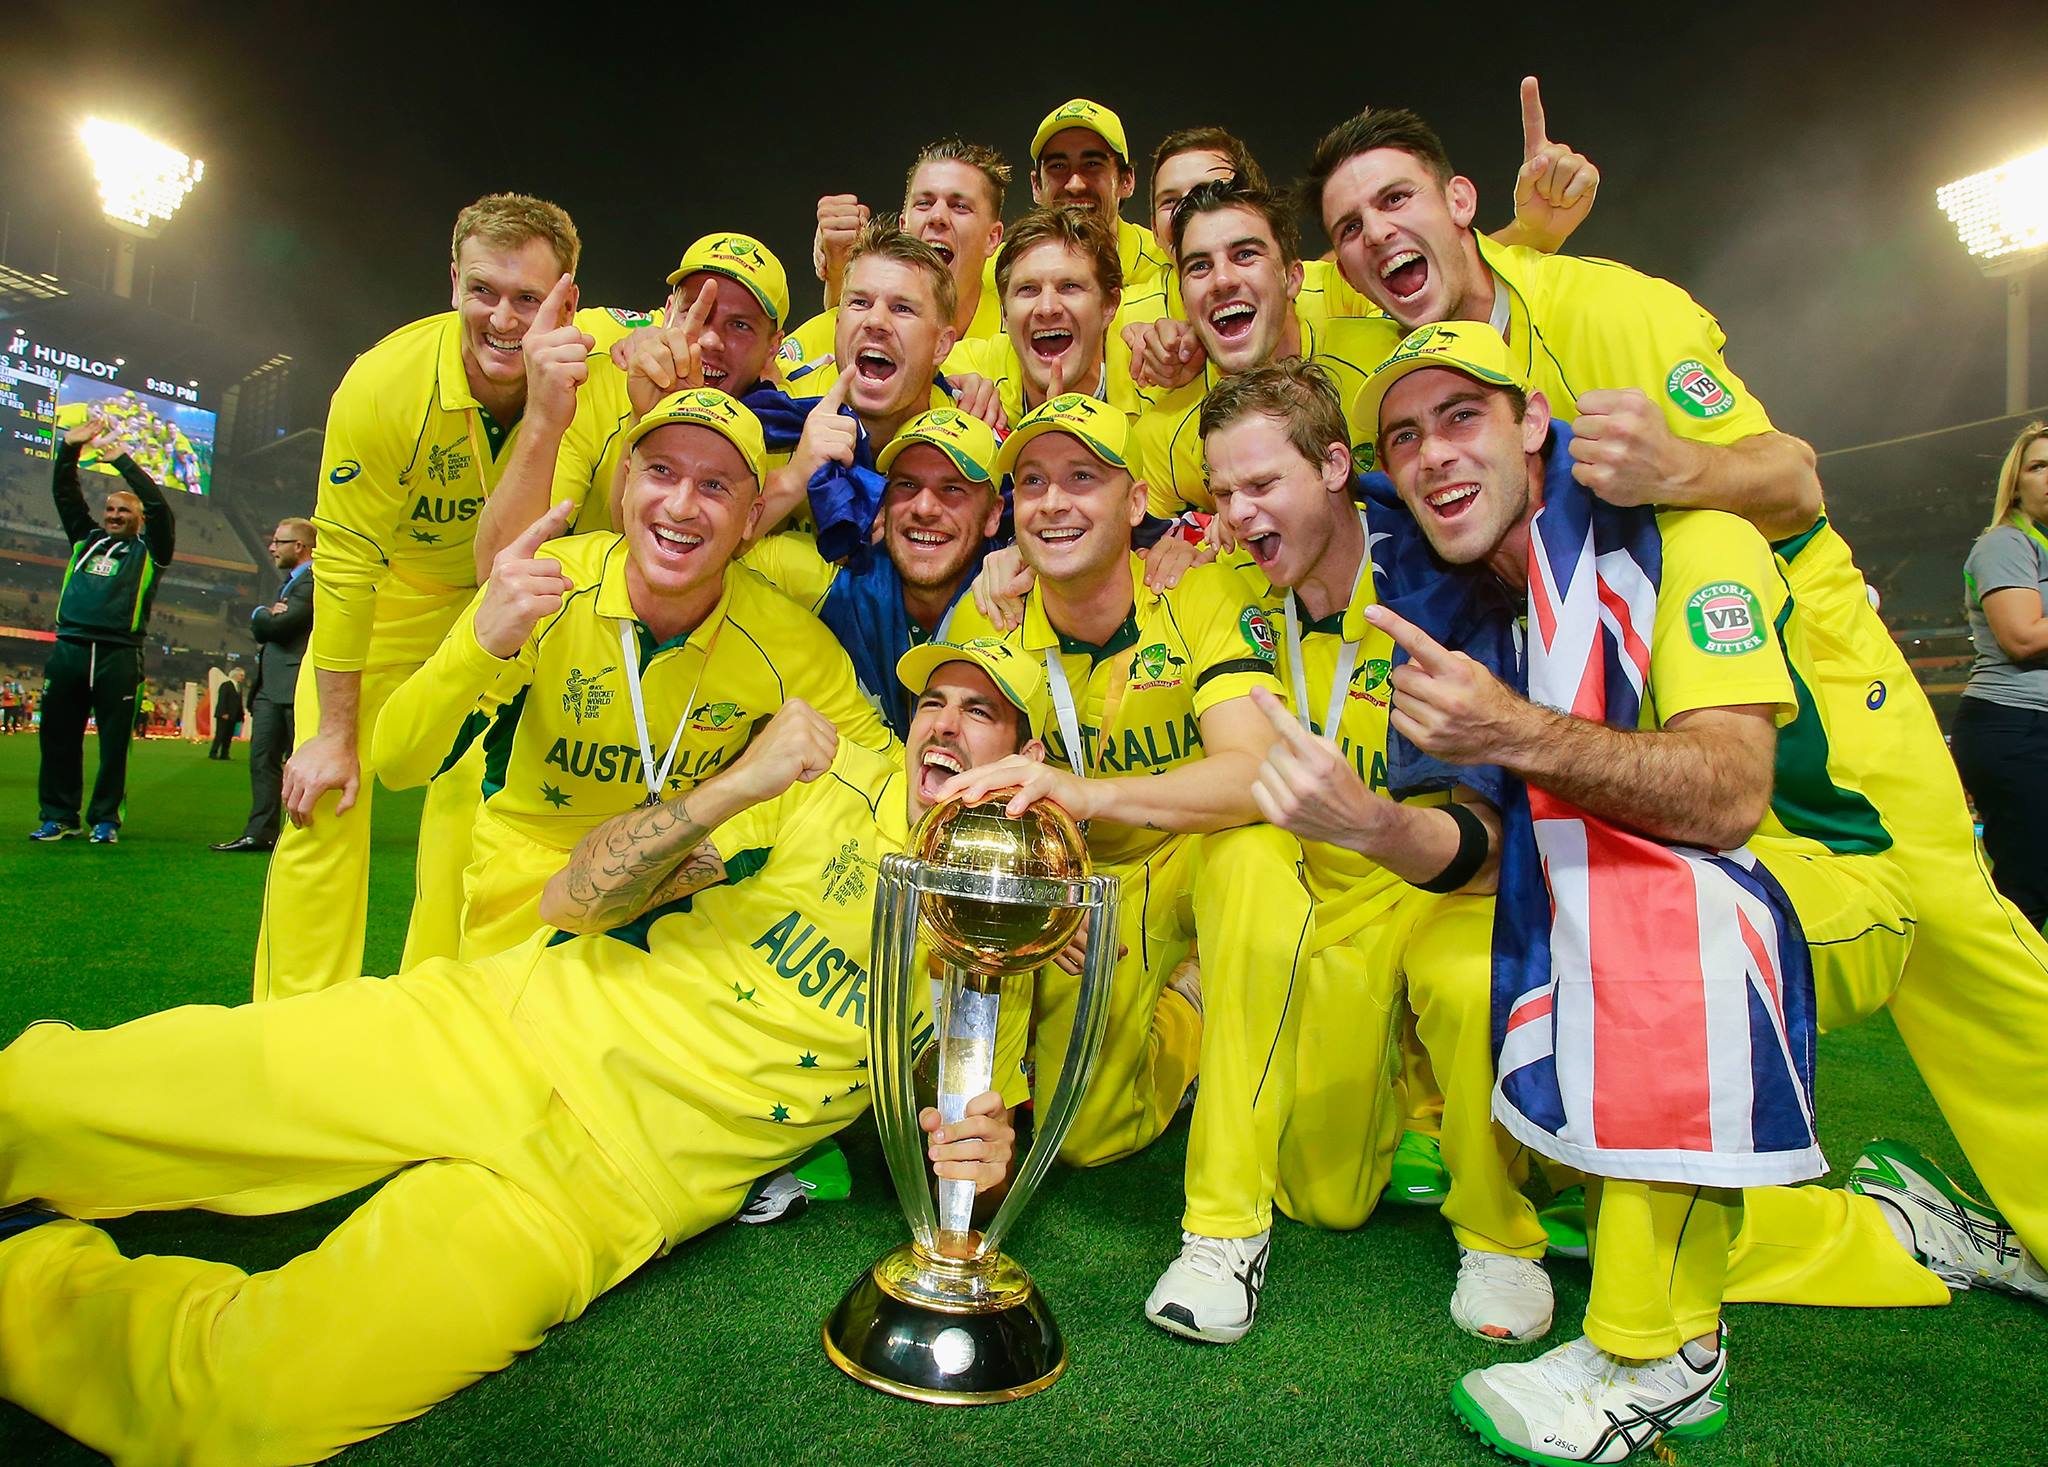 Australia win ICC Cricket World Cup 2015